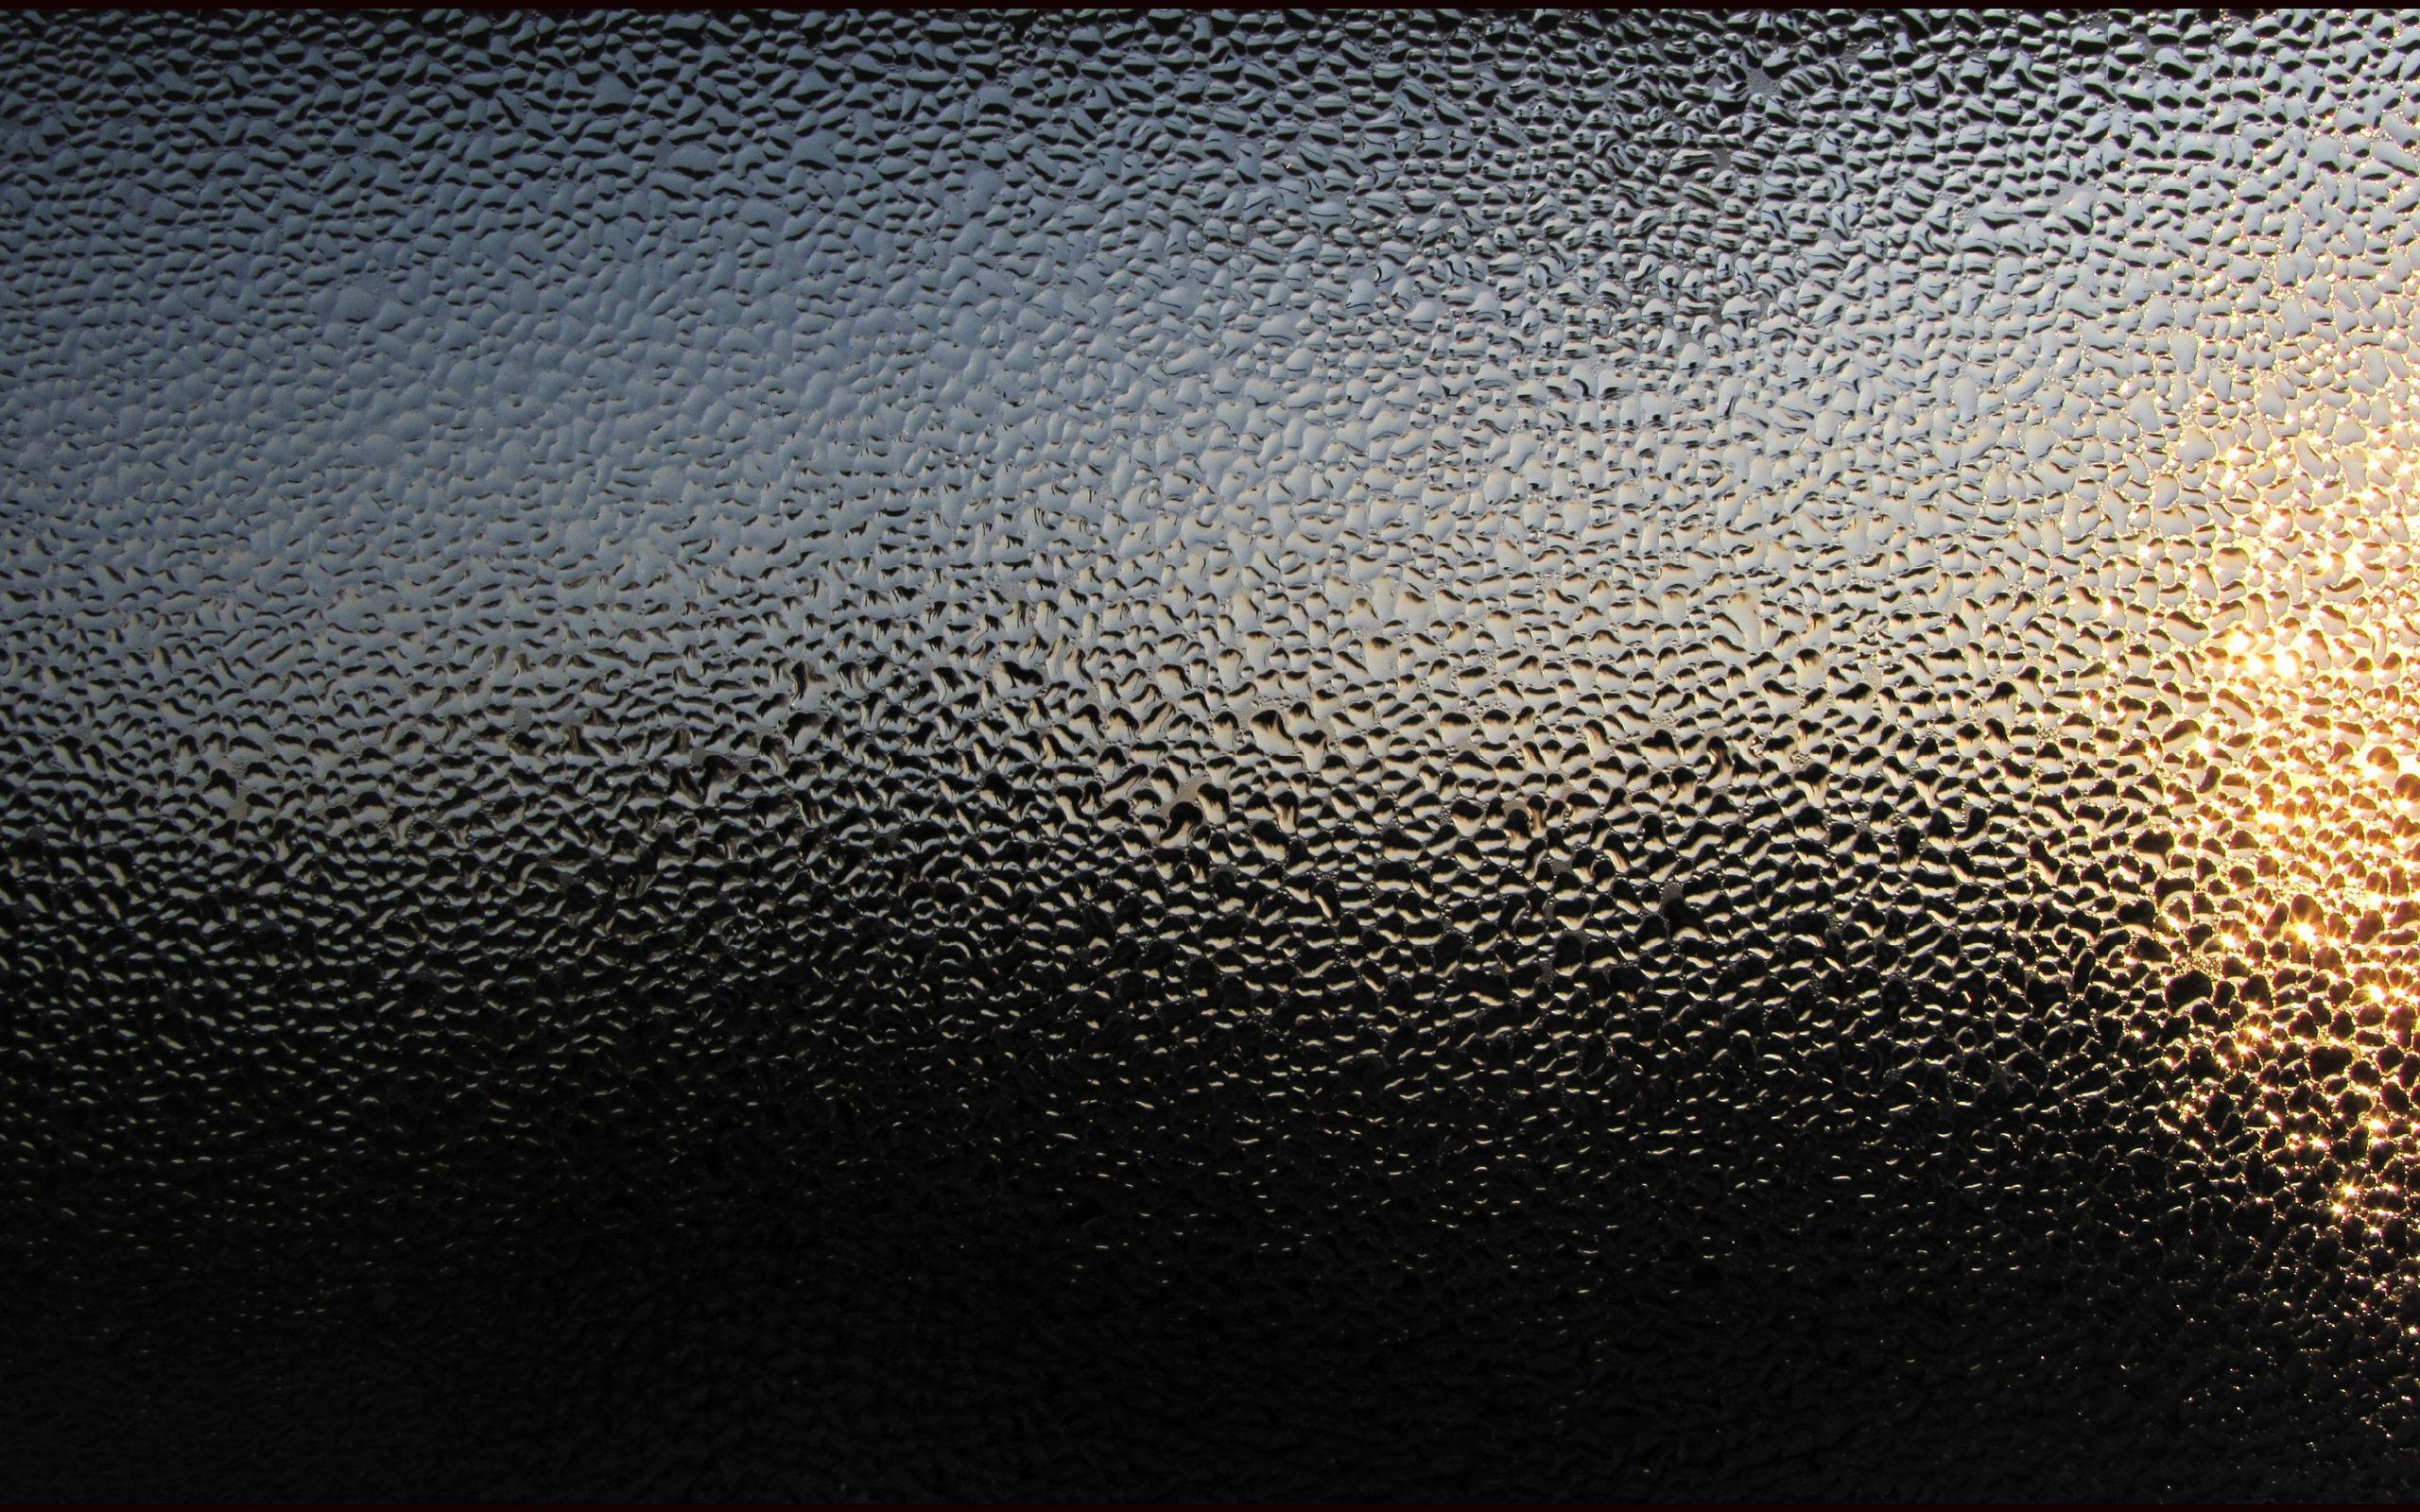 V.174: Glass Wallpaper, HD Image of Glass, Ultra HD 4K Glass